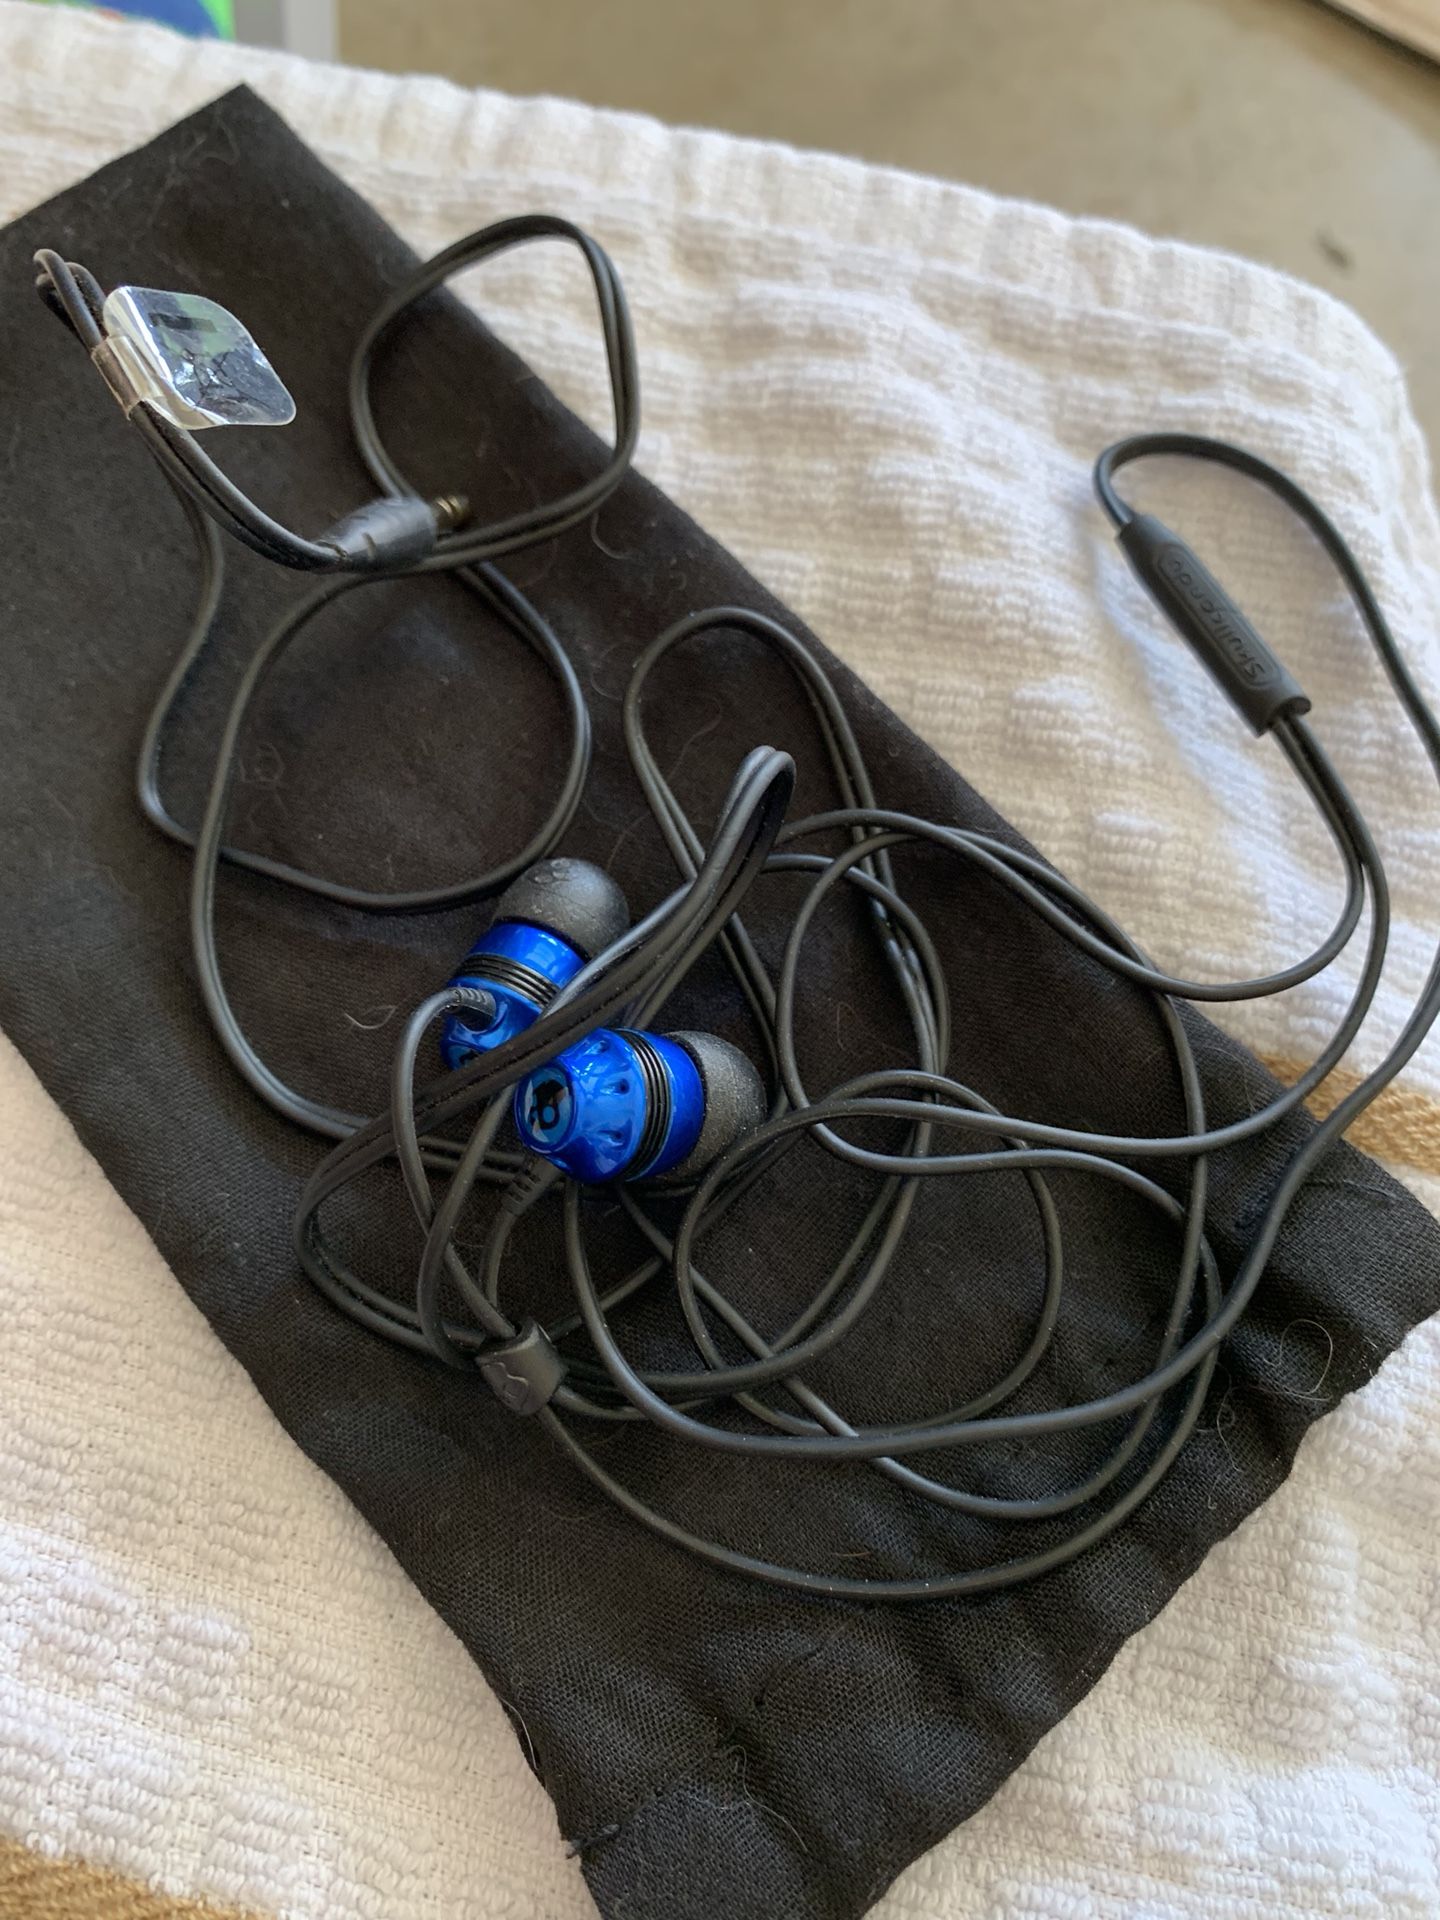 Skullcandy headphones blue